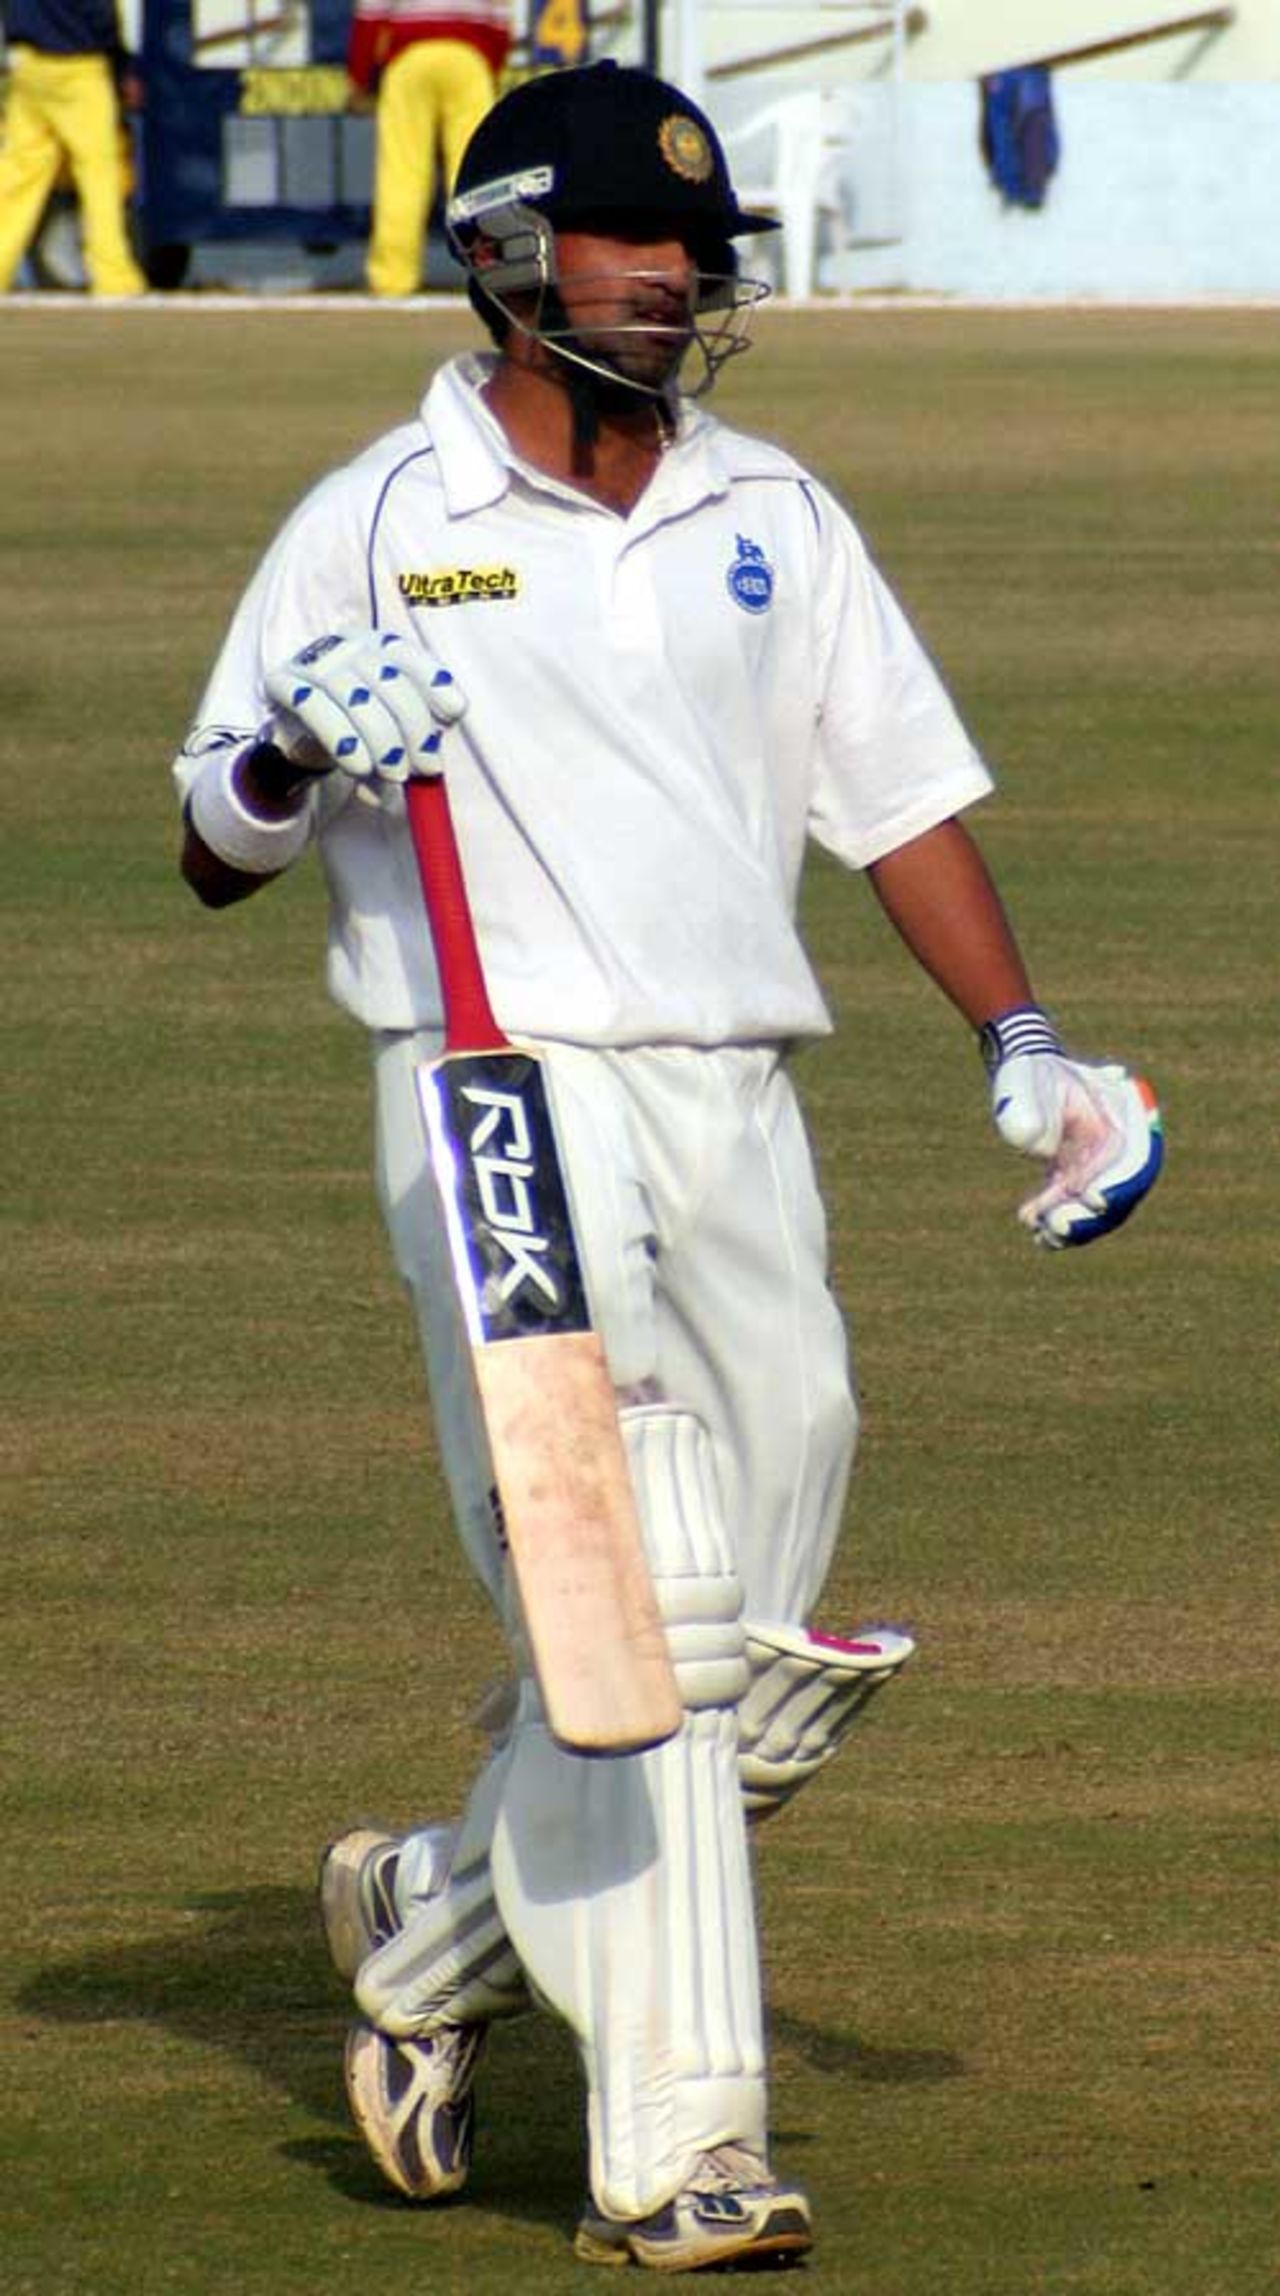 Gautam Gambhir top scored with 13 in Delhi's first innings, Himachal Pradesh v Delhi, Ranji Trophy Super League, Group A, 4th round, 2nd day, Dharamsala, December 2, 2007